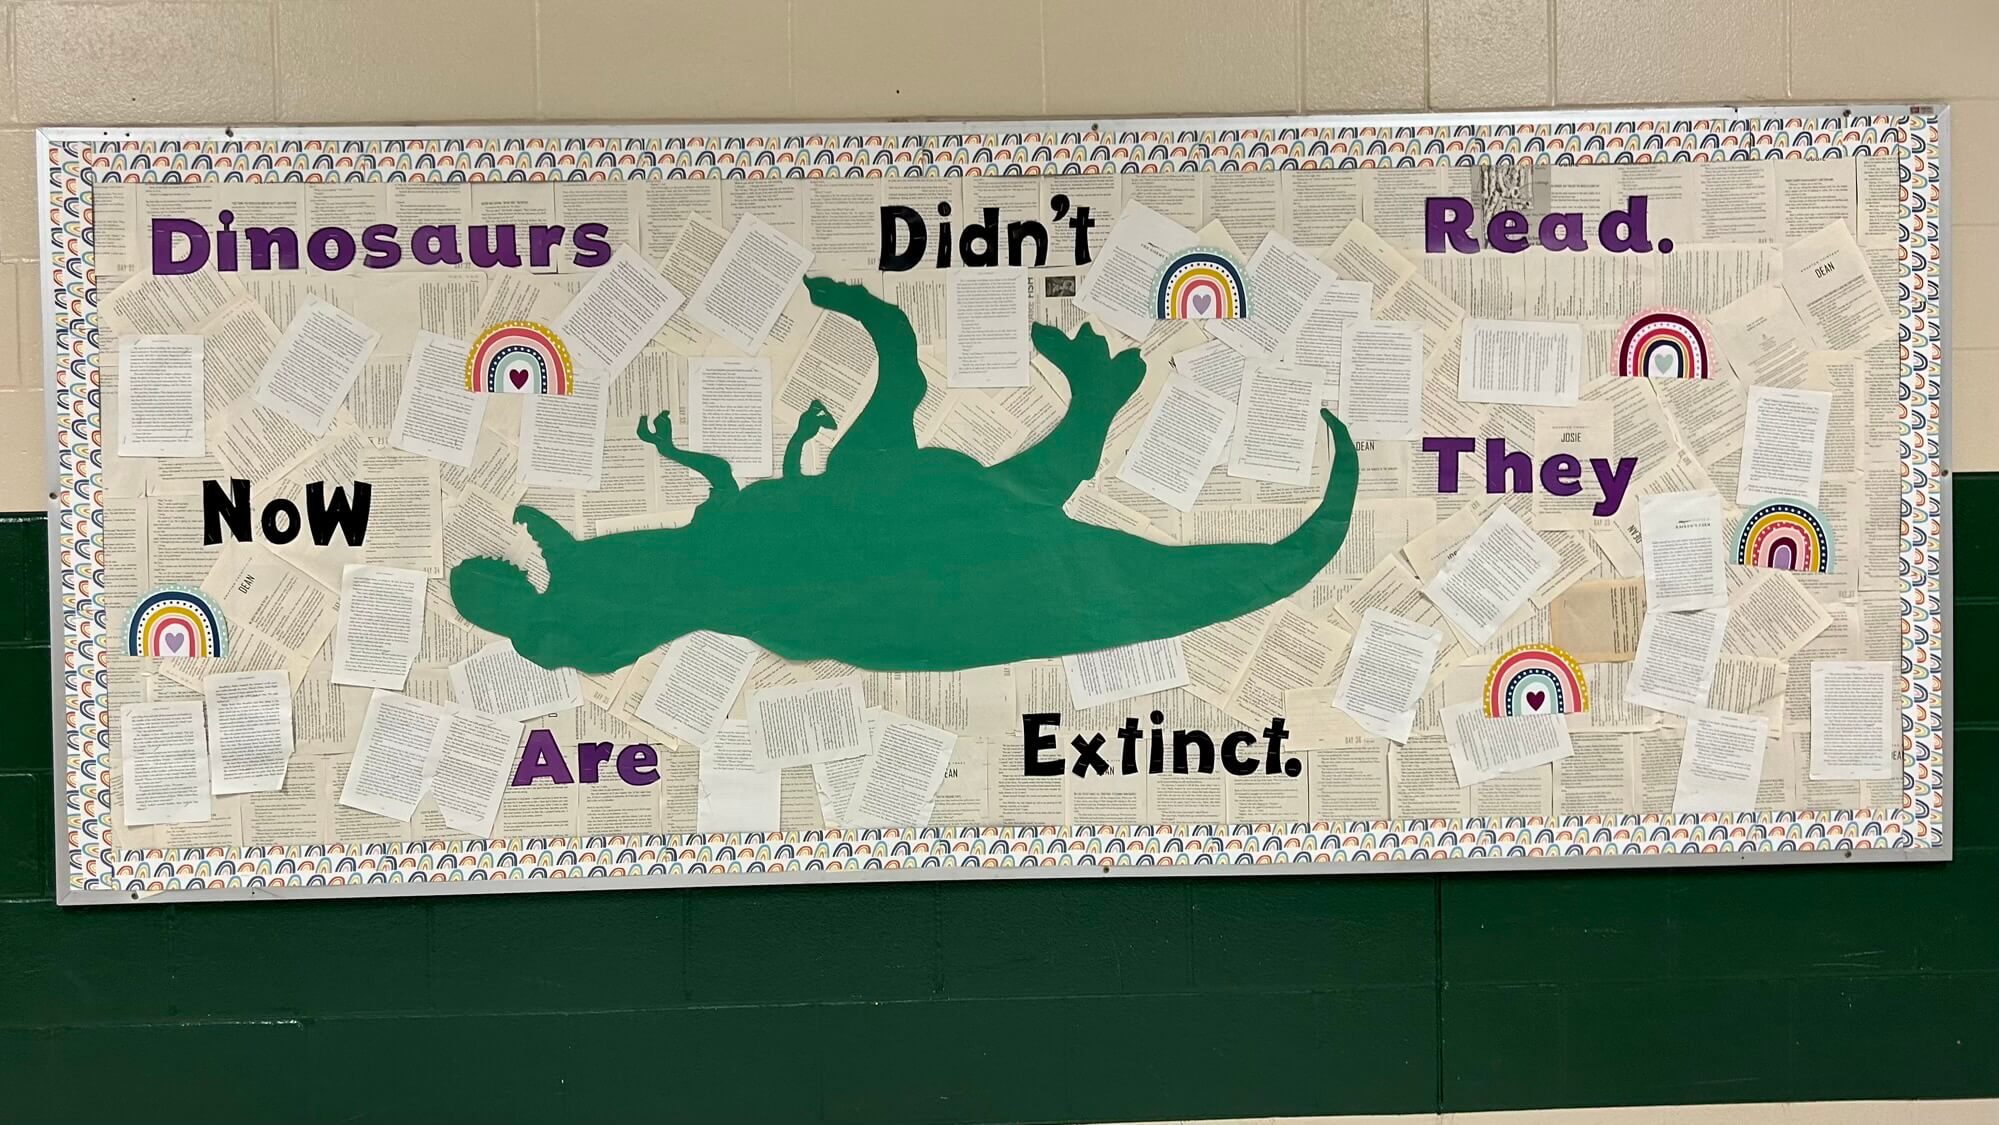 Dinosaurs are extinct